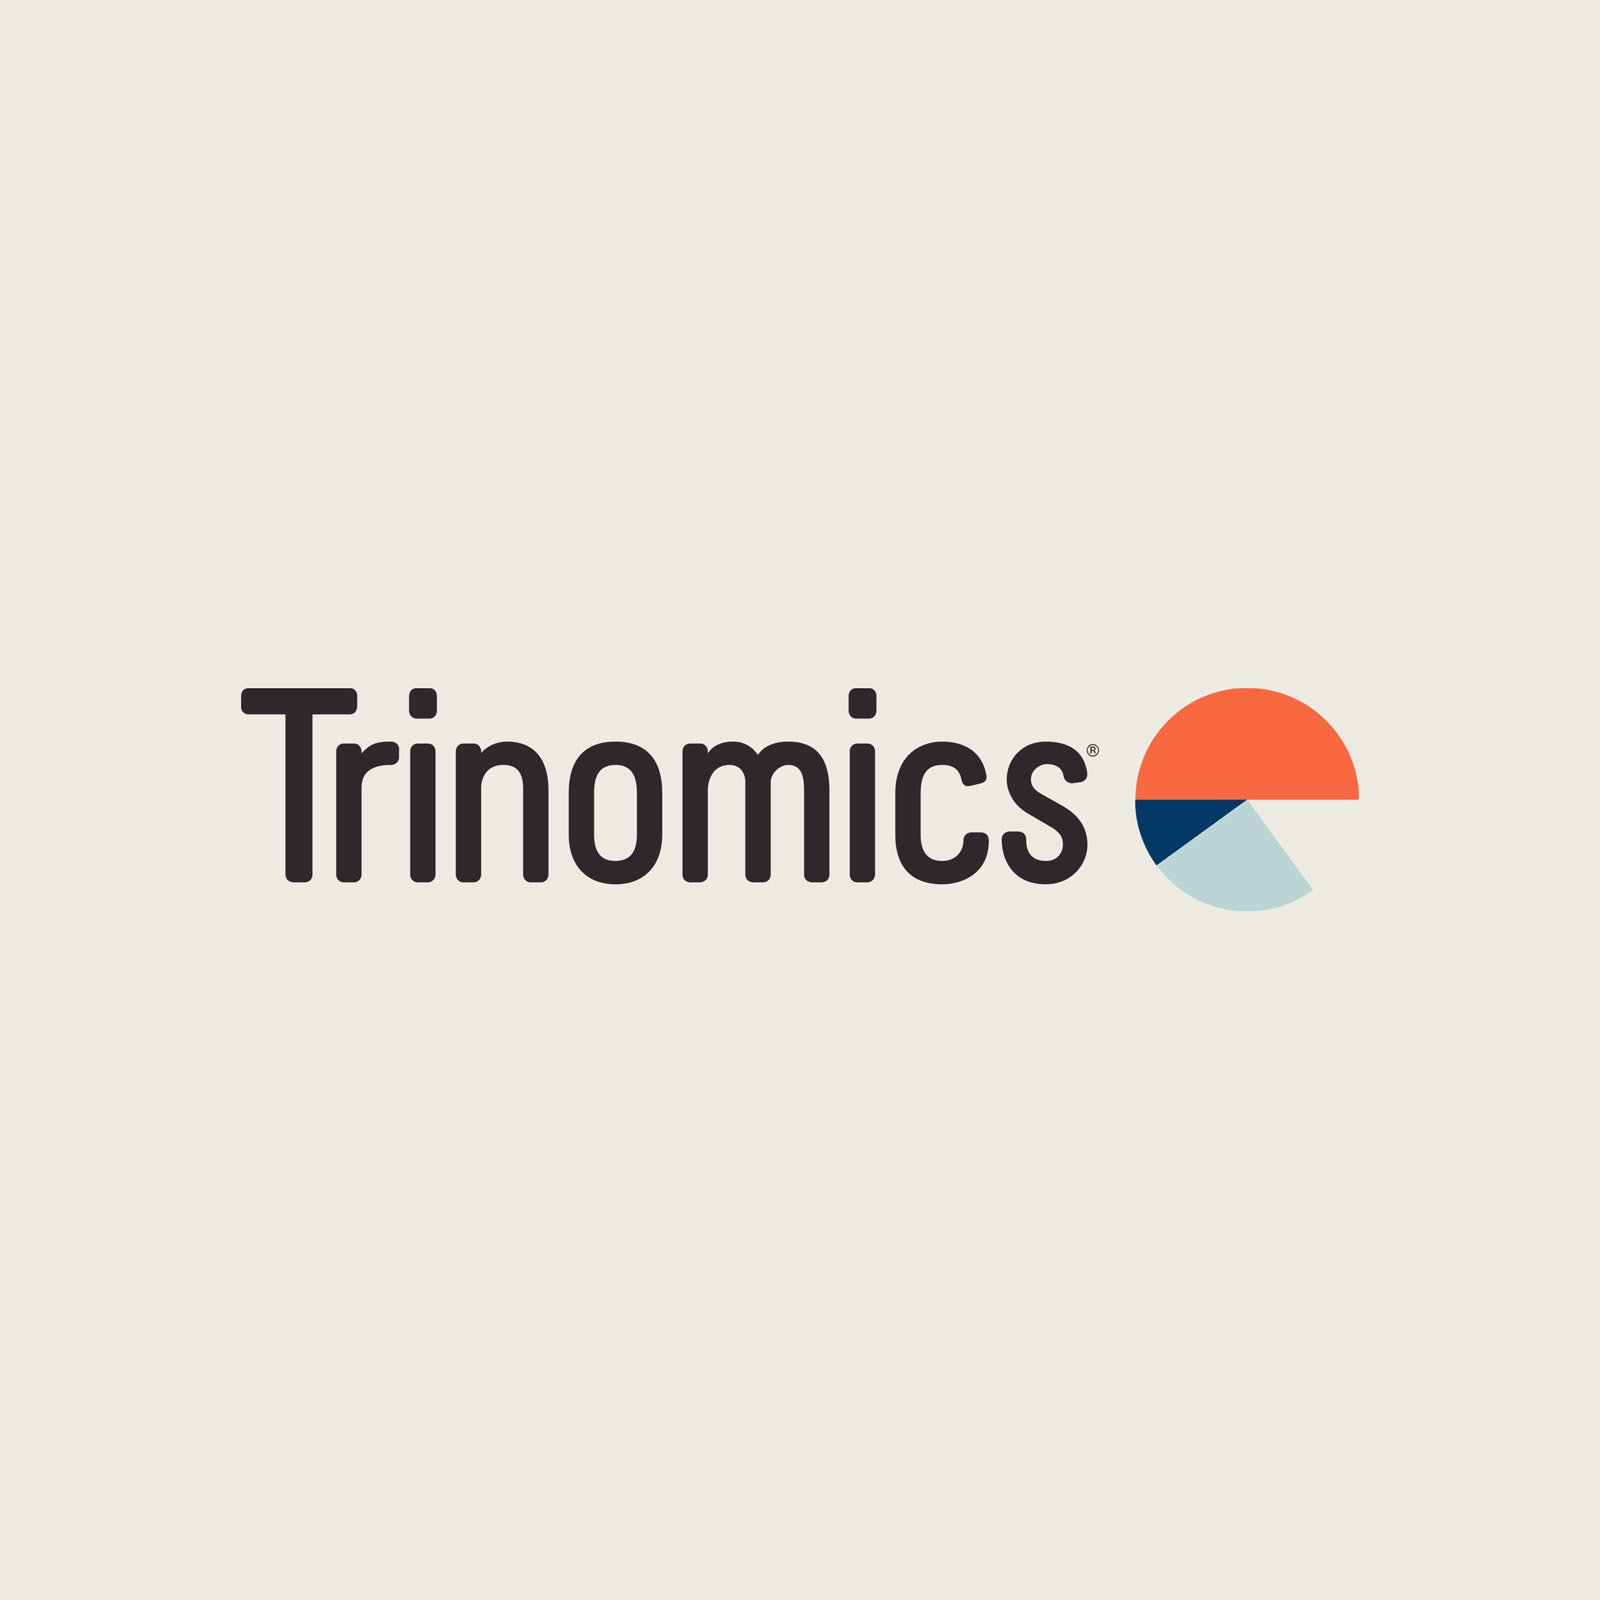 Trinomics-logo.jpg